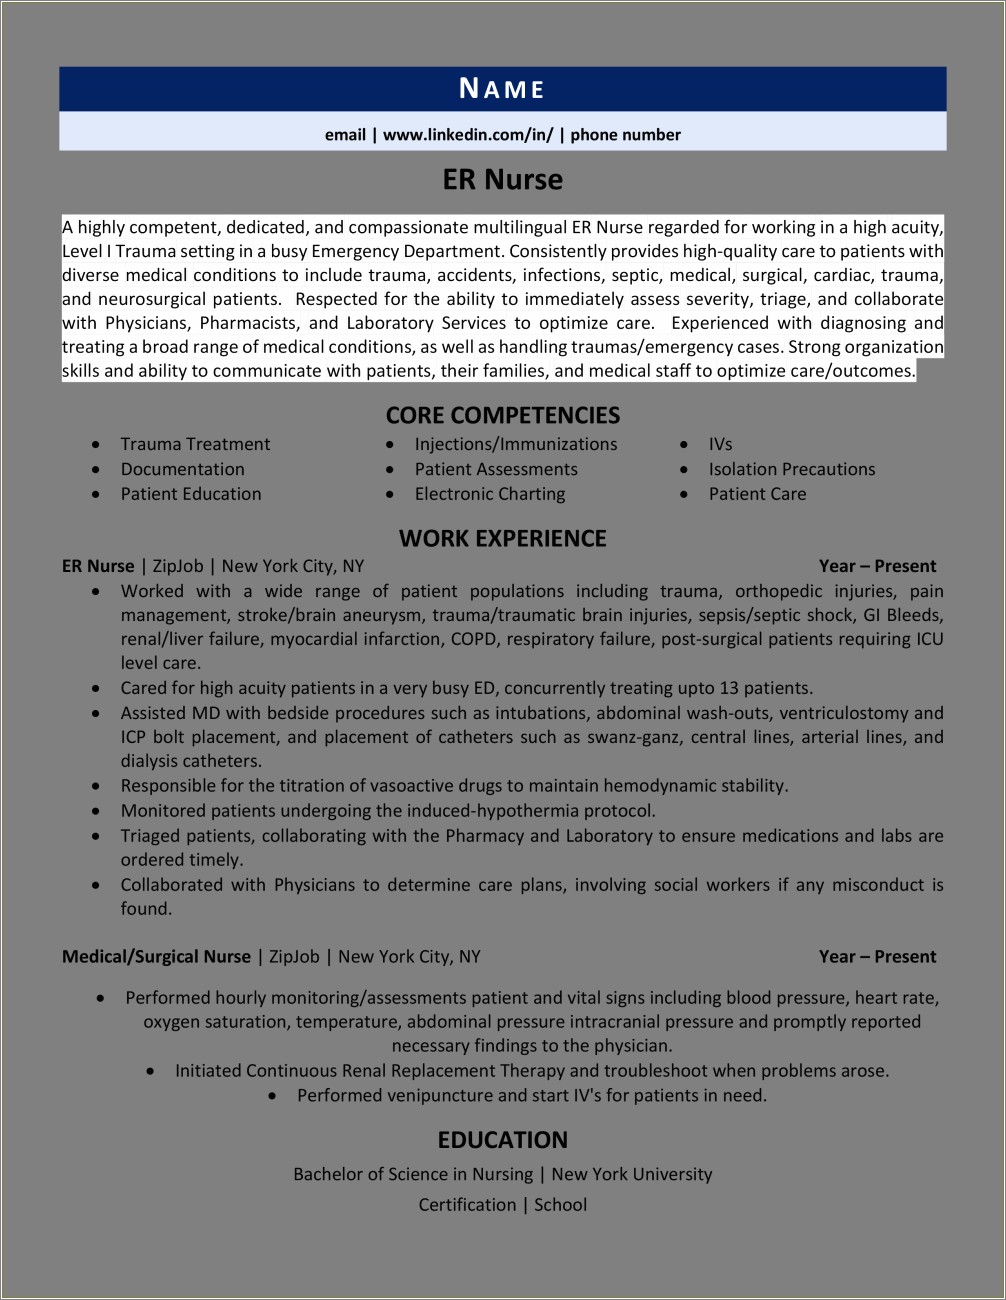 Job Description Of Ed Nurse For Resume